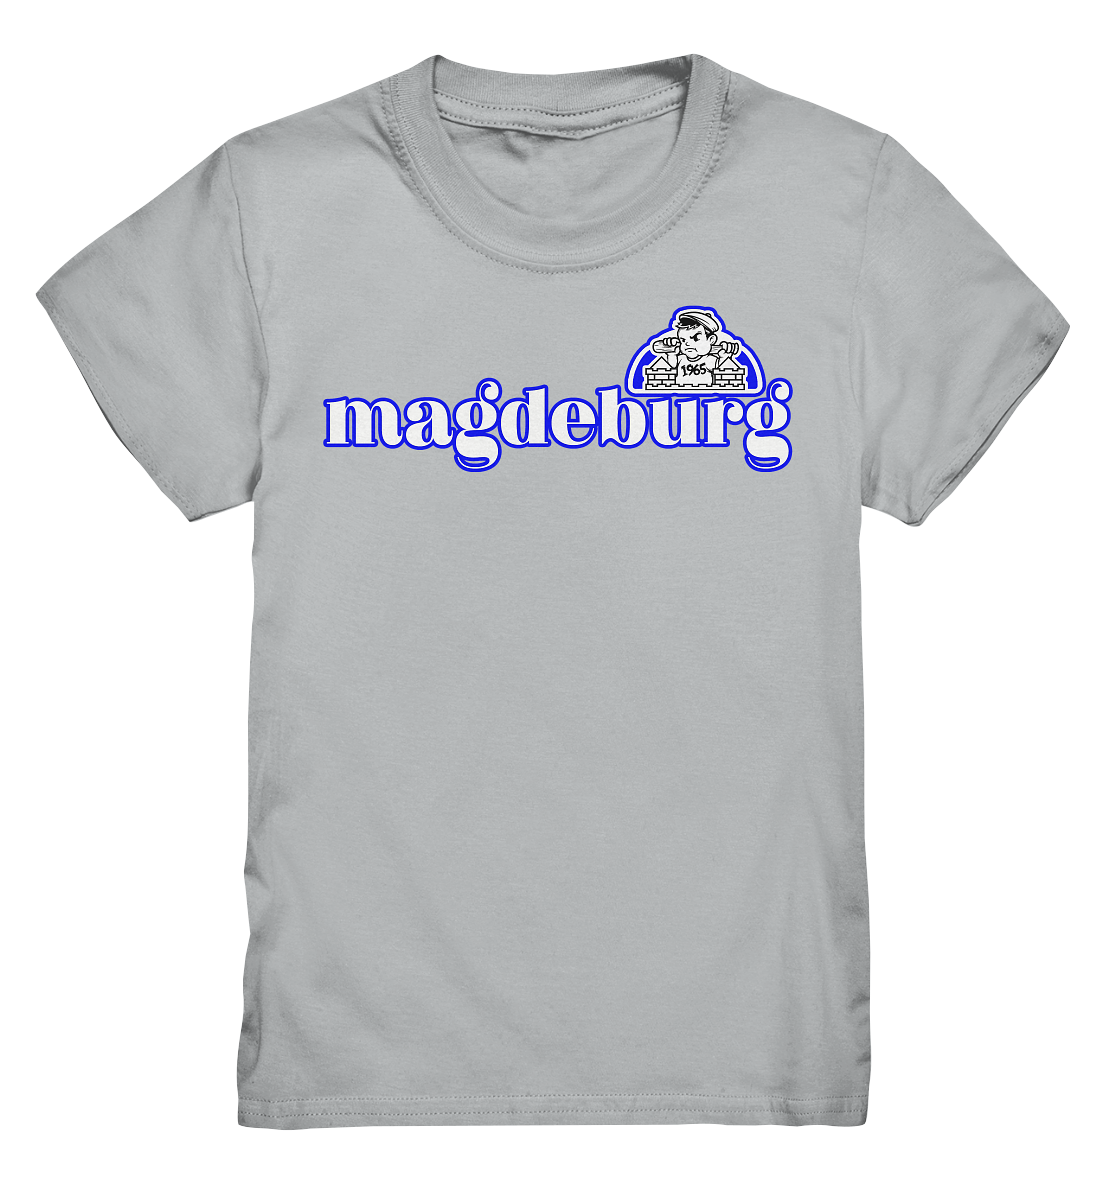 Magdeburger - Kids Premium Shirt